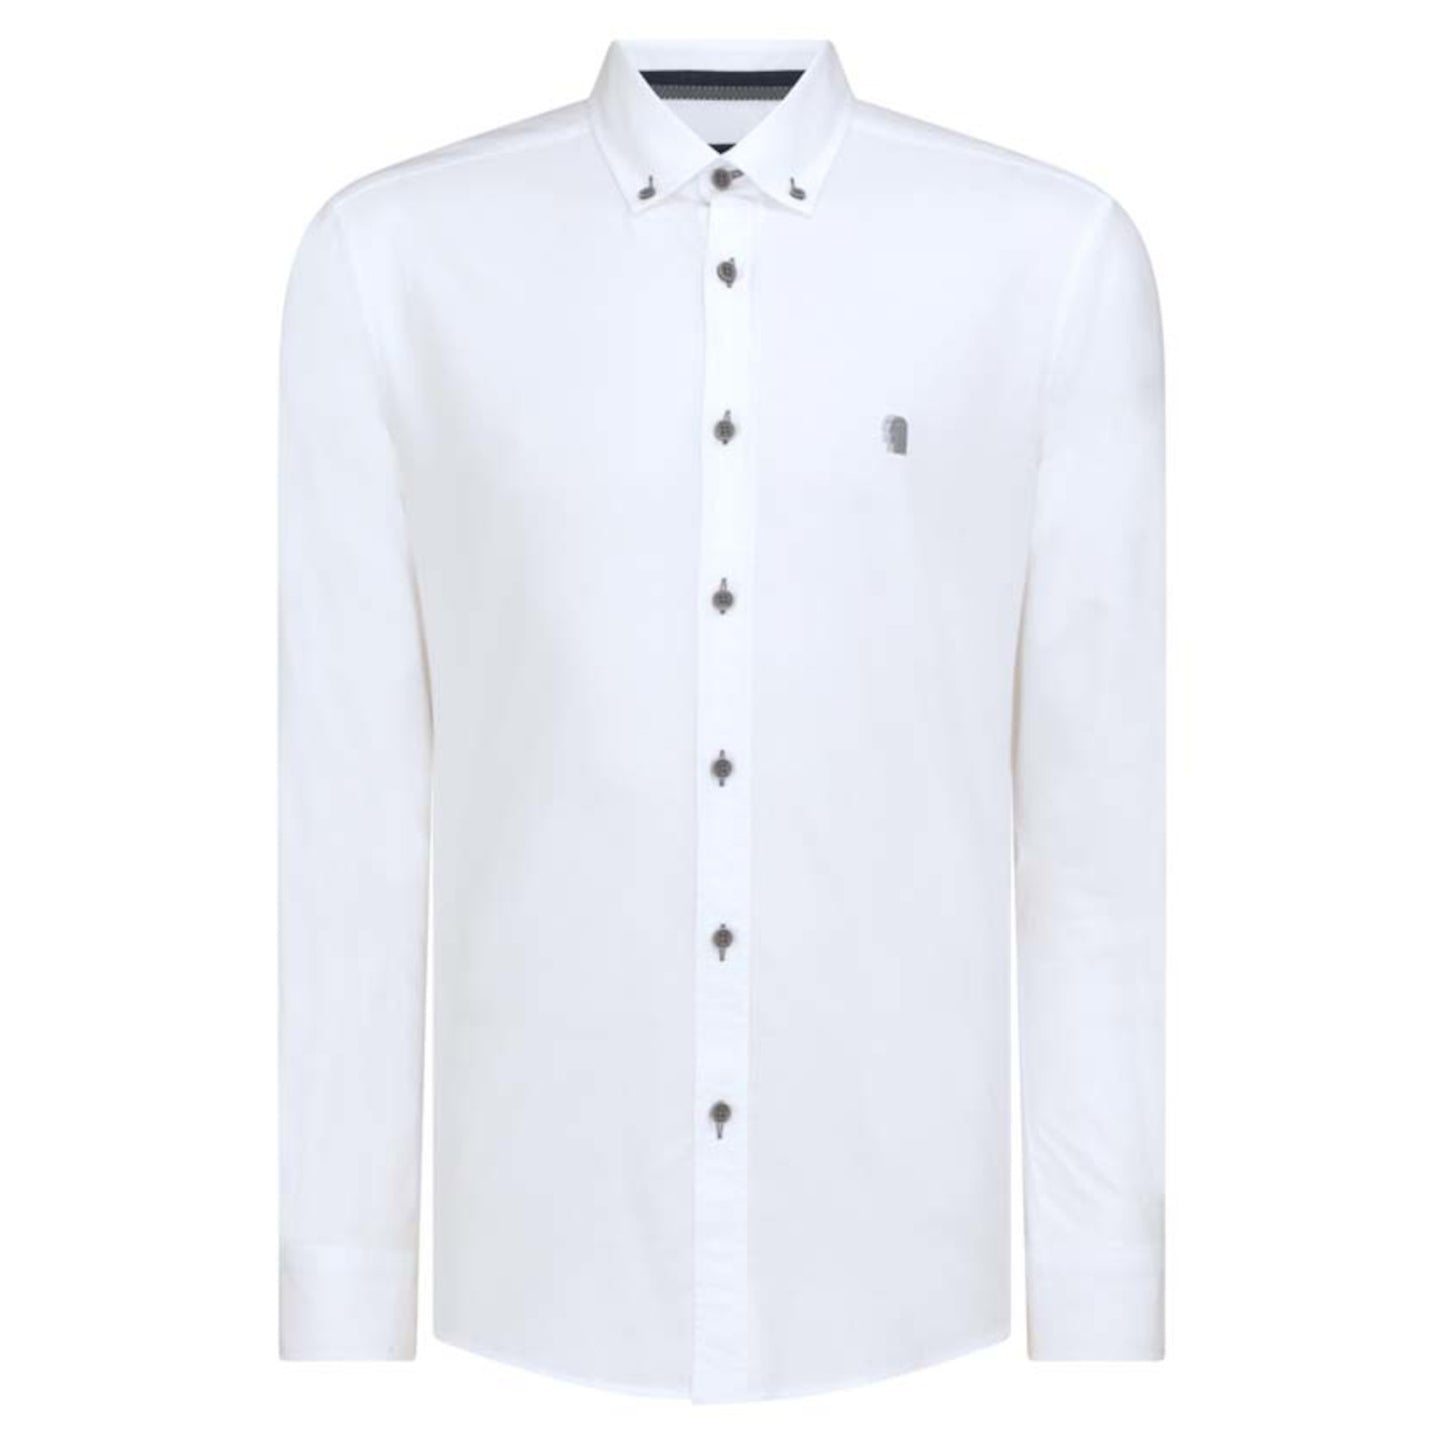 Remus Uomo 13600 01 White Tapered Long Sleeve Oxford Shirt